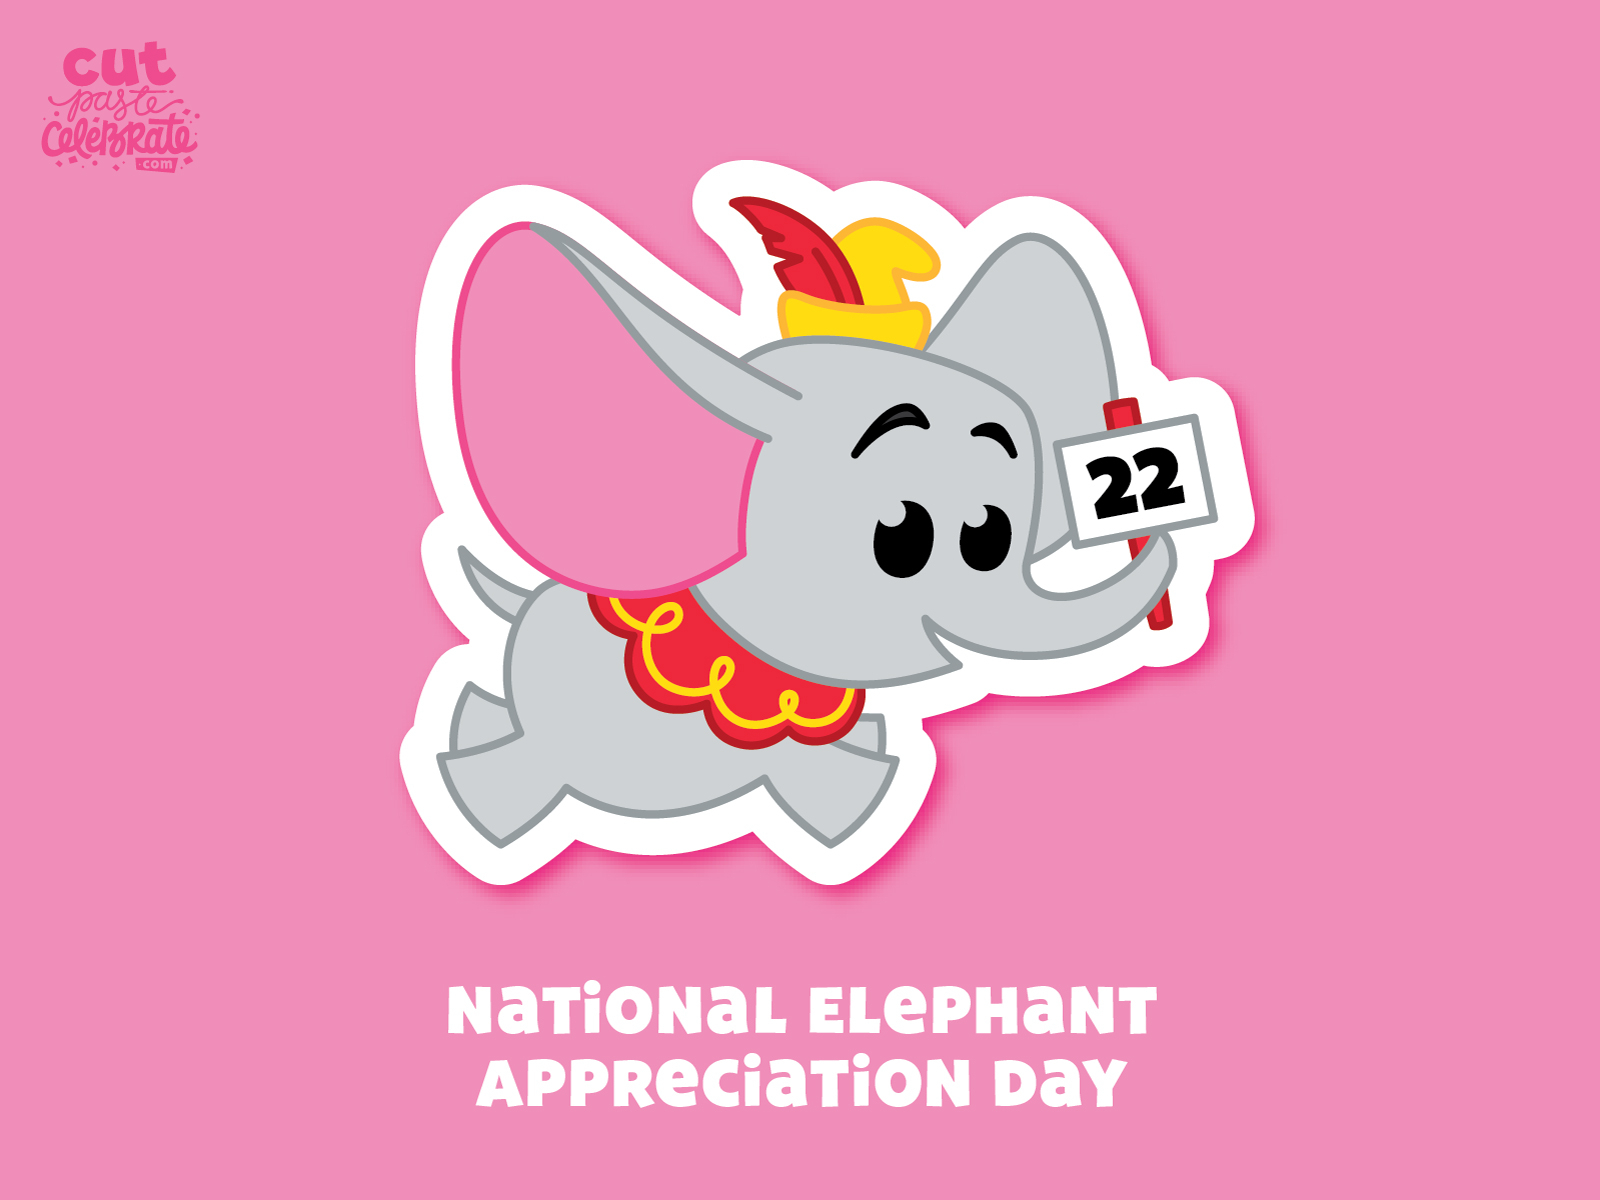 September 22 National Elephant Appreciation Day by Curt R. Jensen on